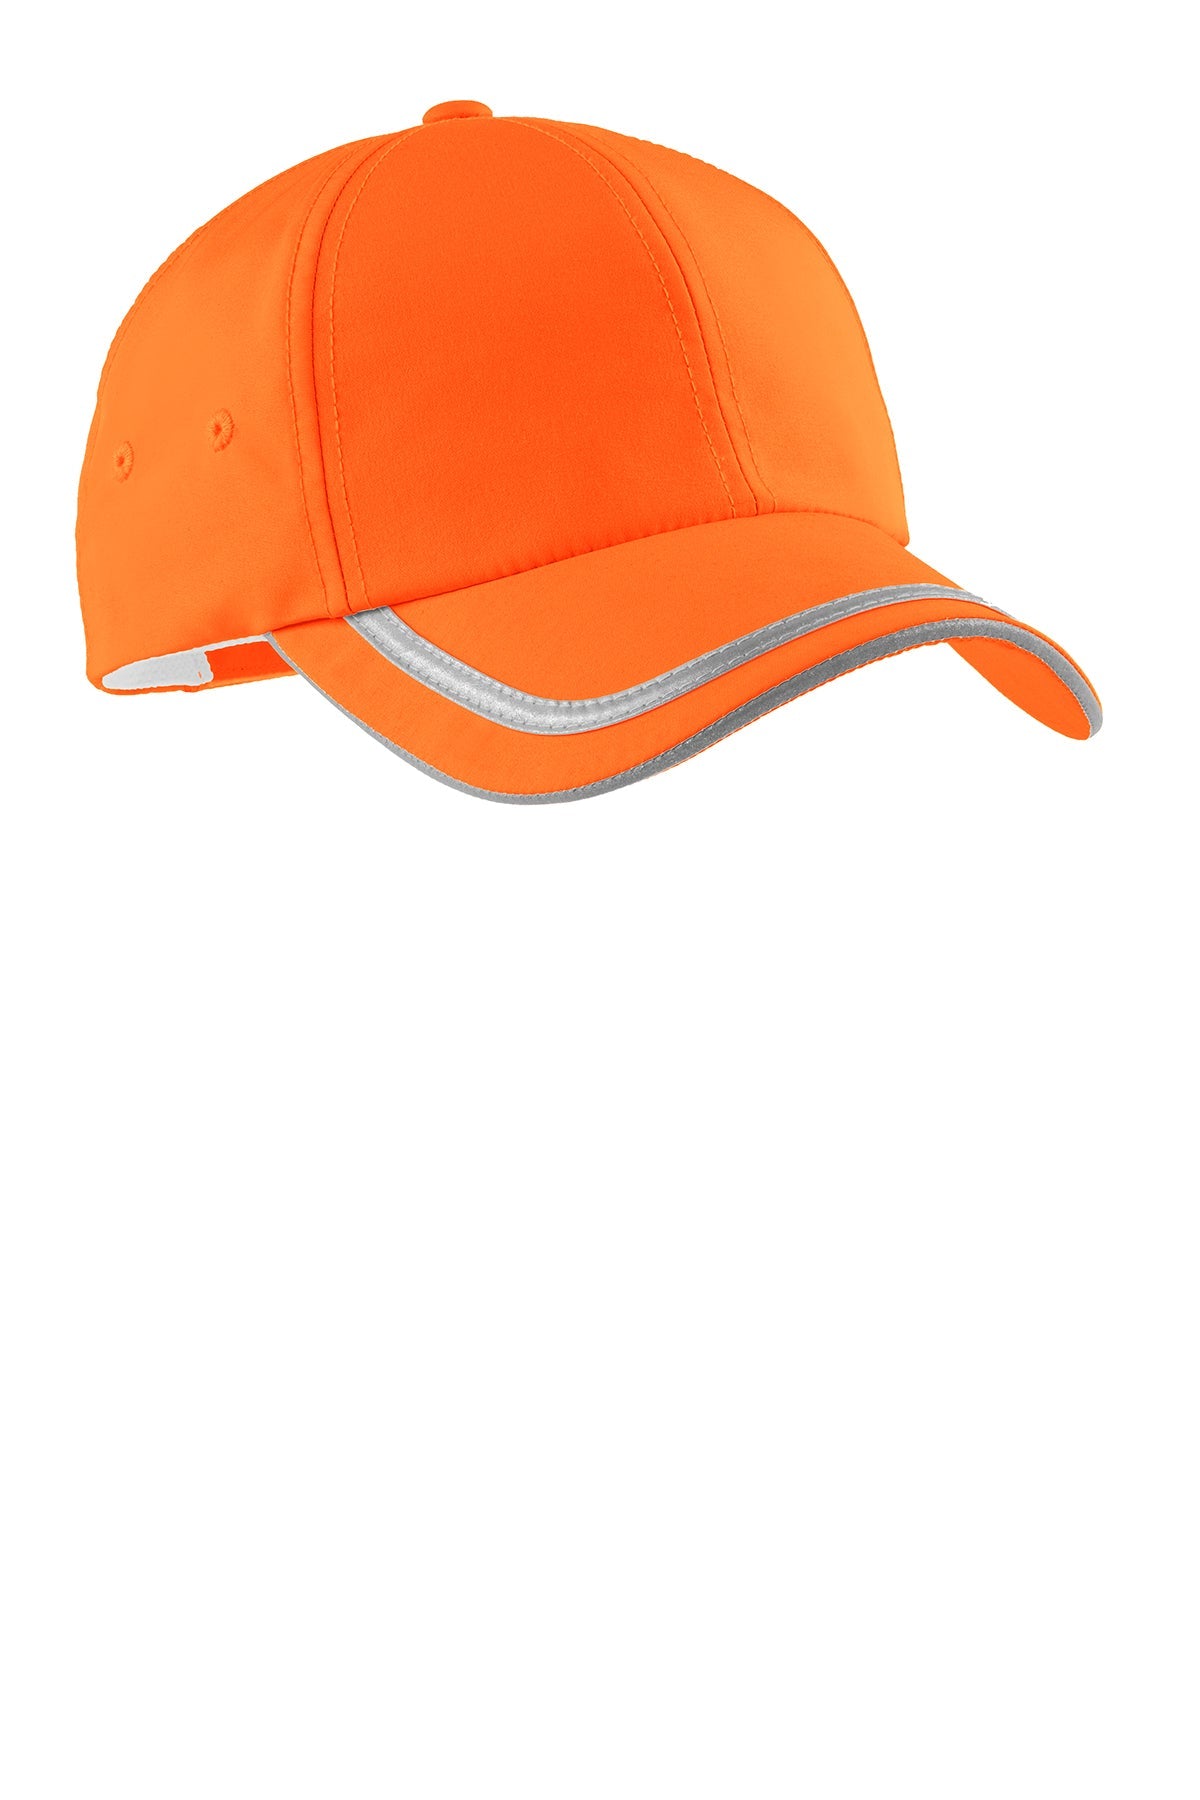 Port Authority Enhanced Branded Visibility Caps, Safety Orange/ Reflective